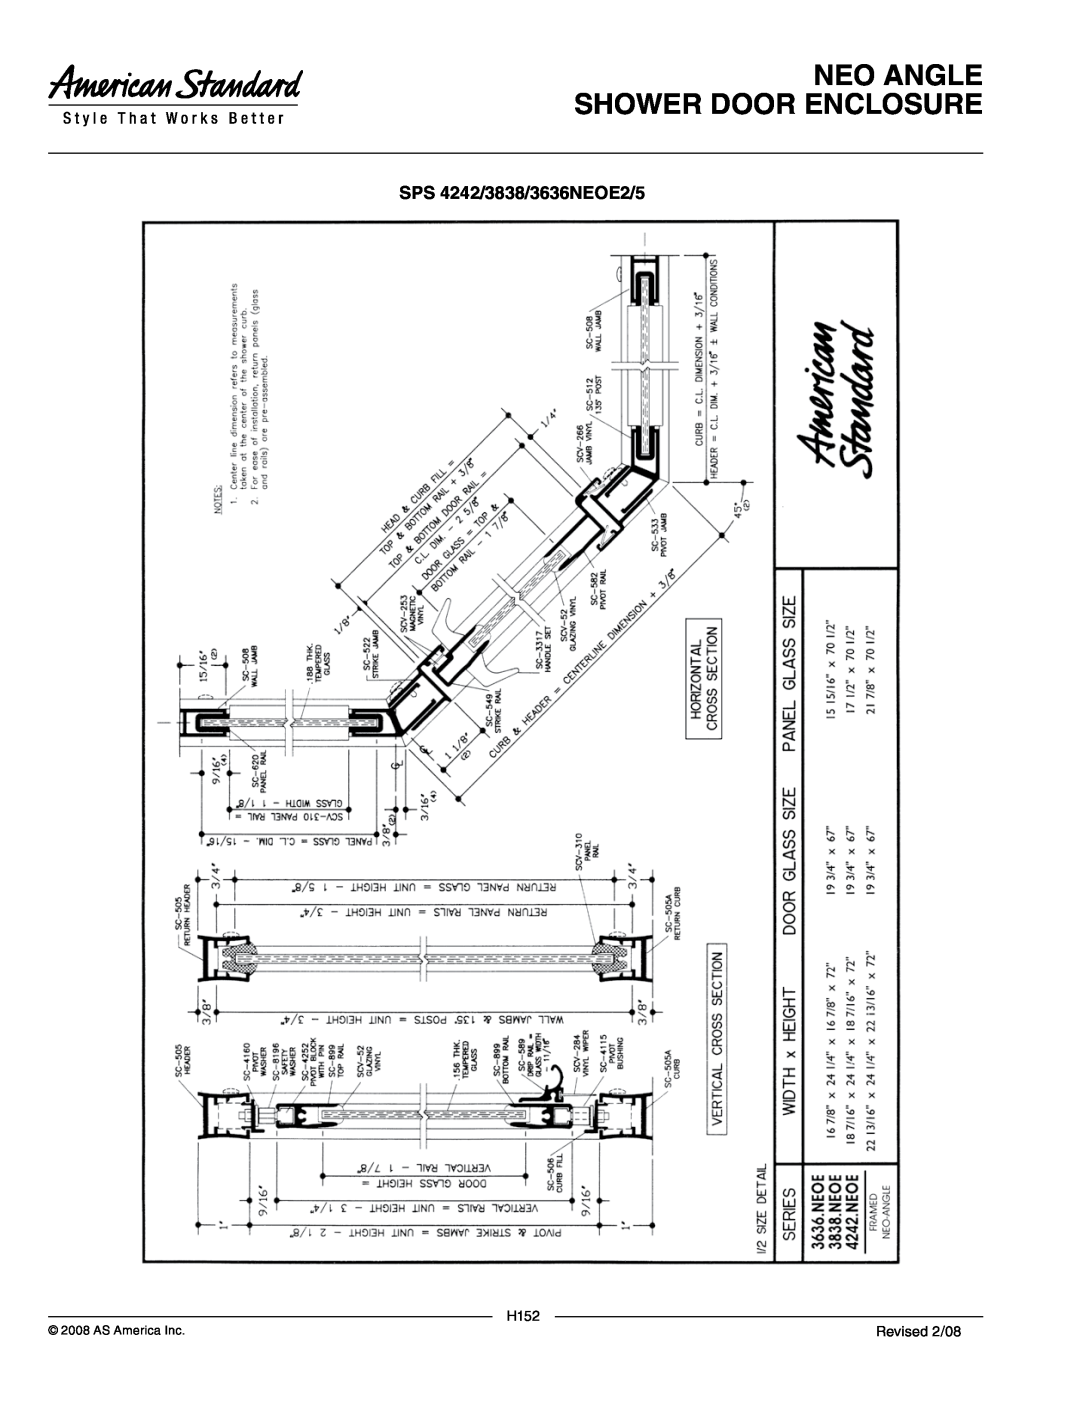 American Standard 4242.NEOE5, 3636.NEOE5 SPS 4242/3838/3636NEOE2/5, Neo Angle Shower Door Enclosure, H152, Revised 2/08 